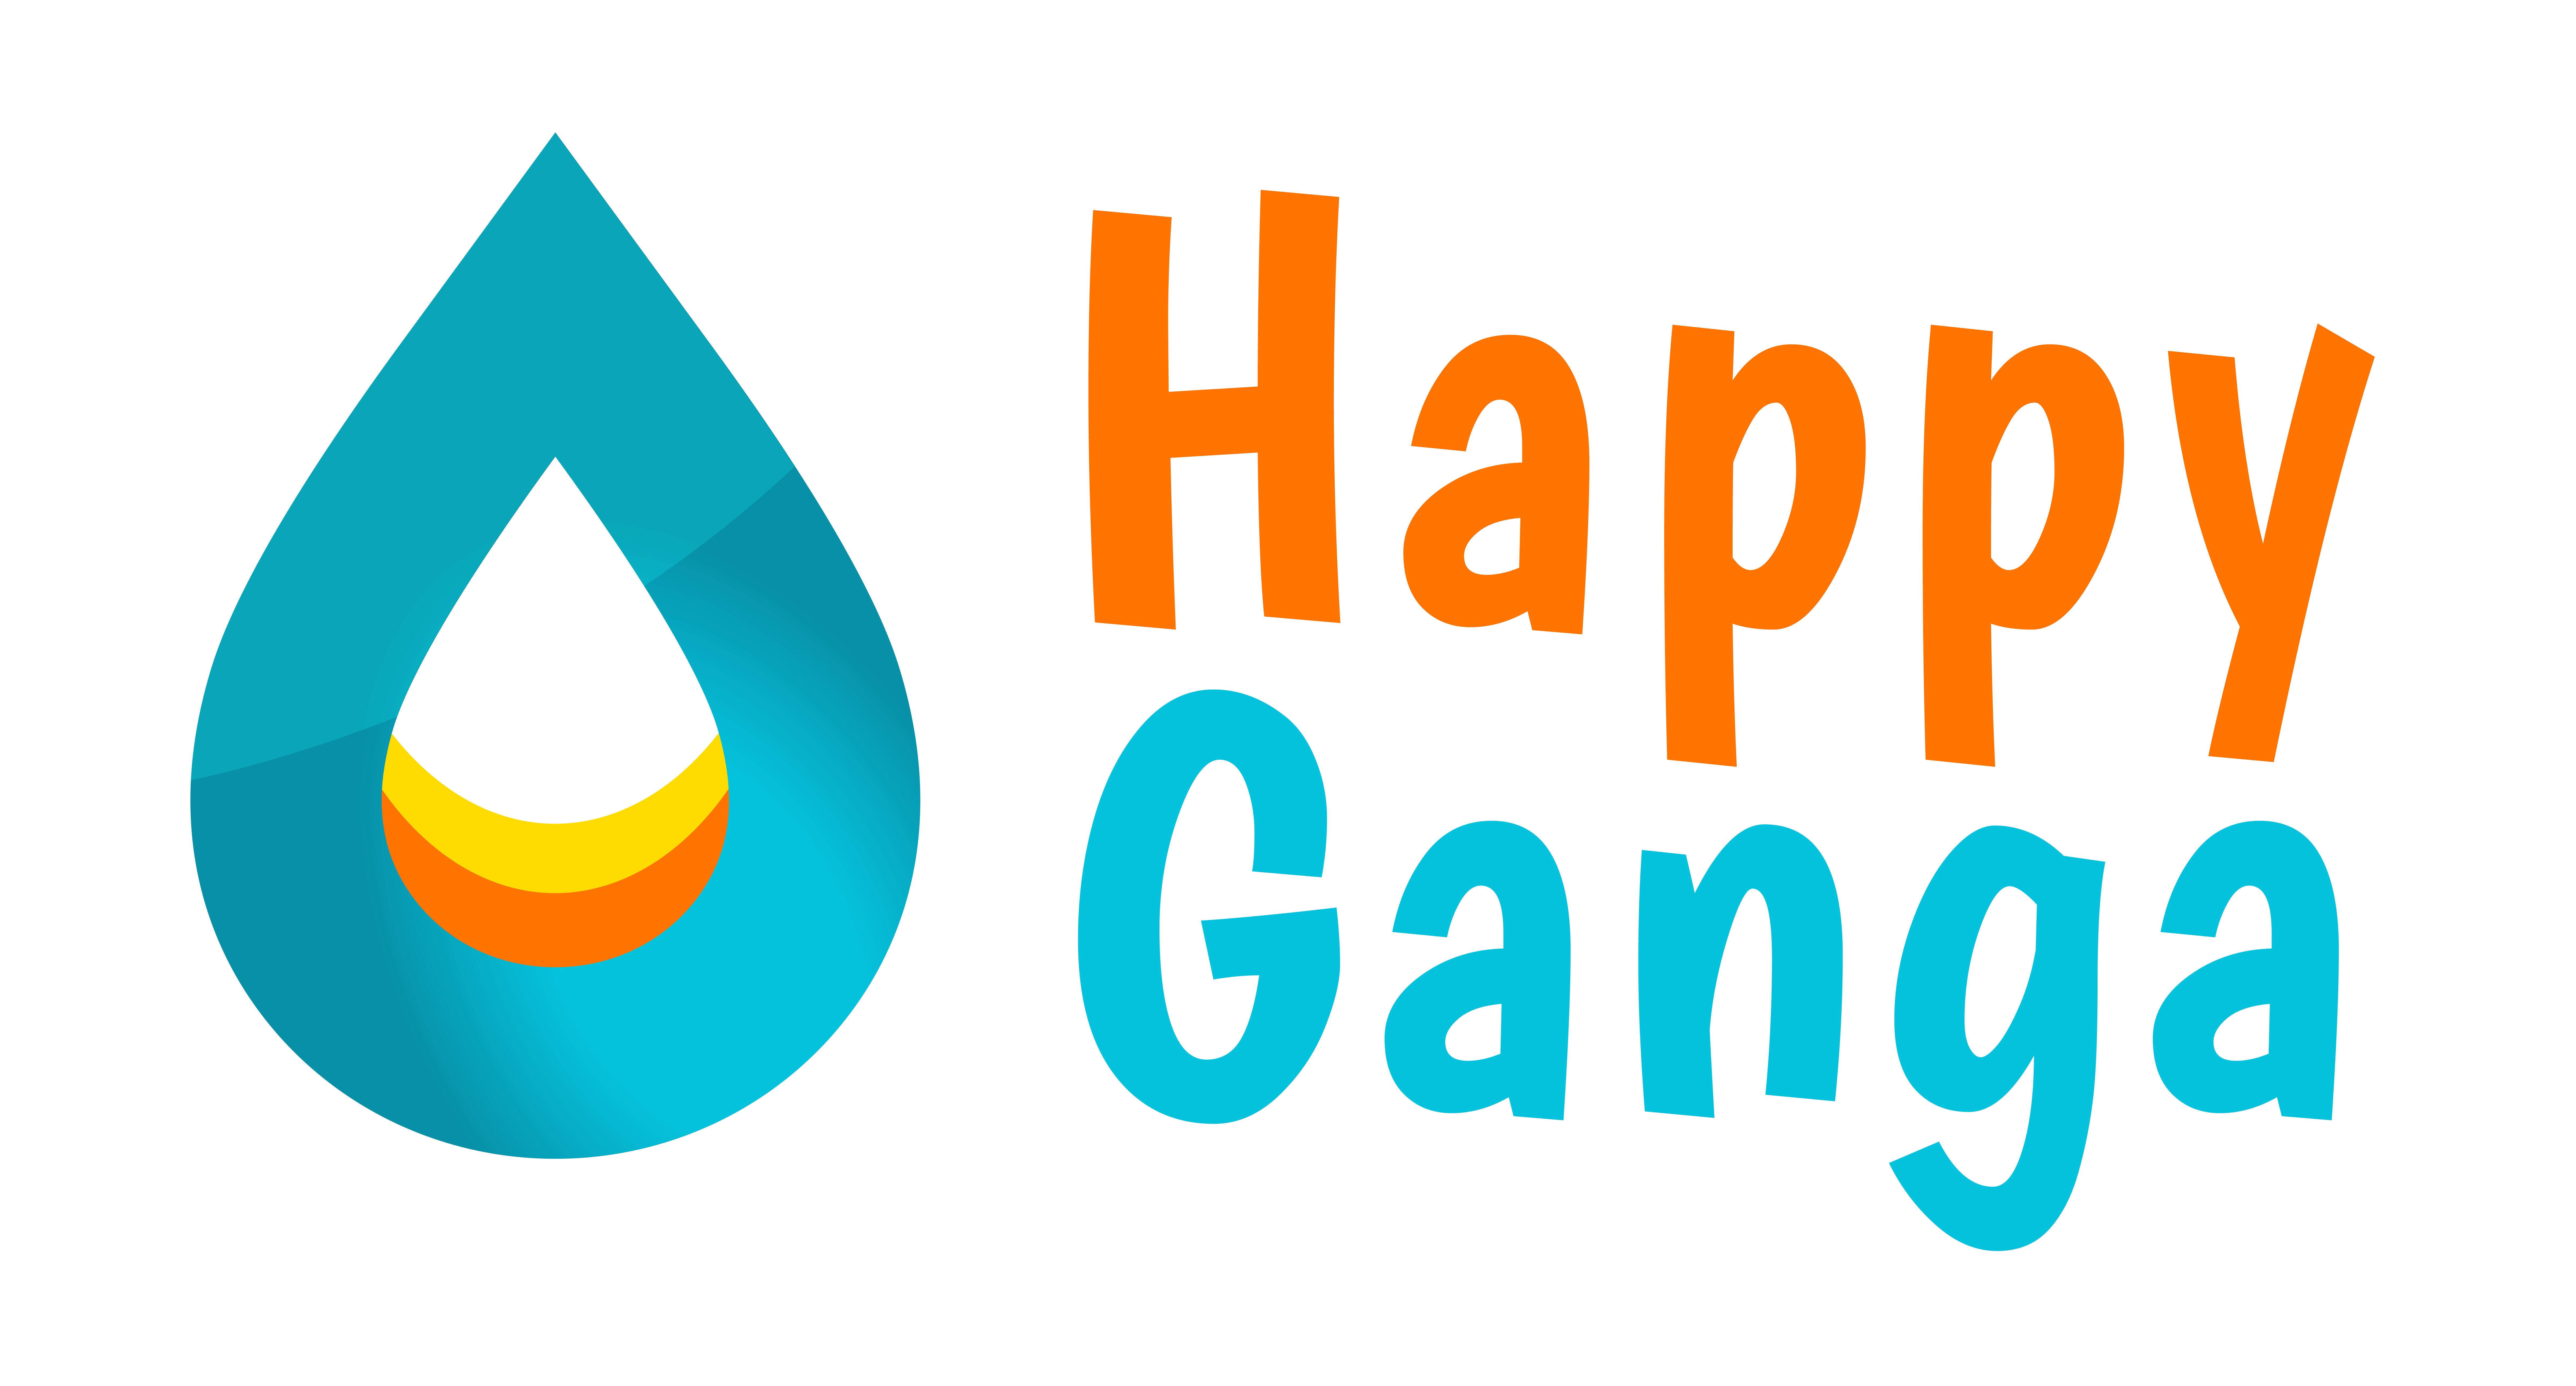 Happy Ganga Coupon Codes